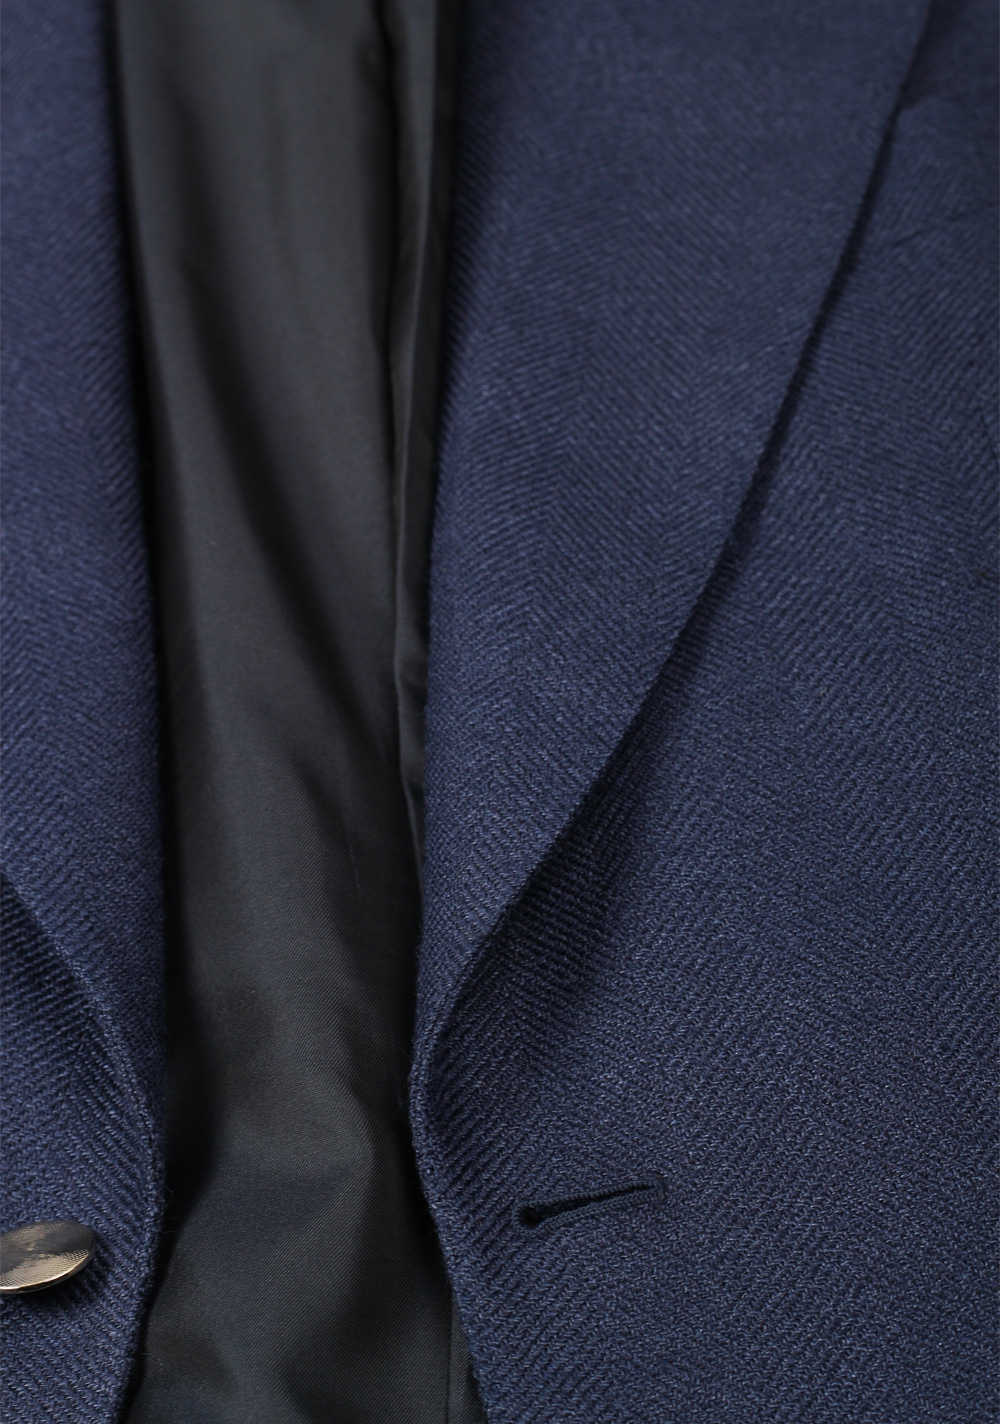 TOM FORD Windsor Blue Blazer Sport Coat Size 48 / 38R U.S. Fit A | Costume Limité